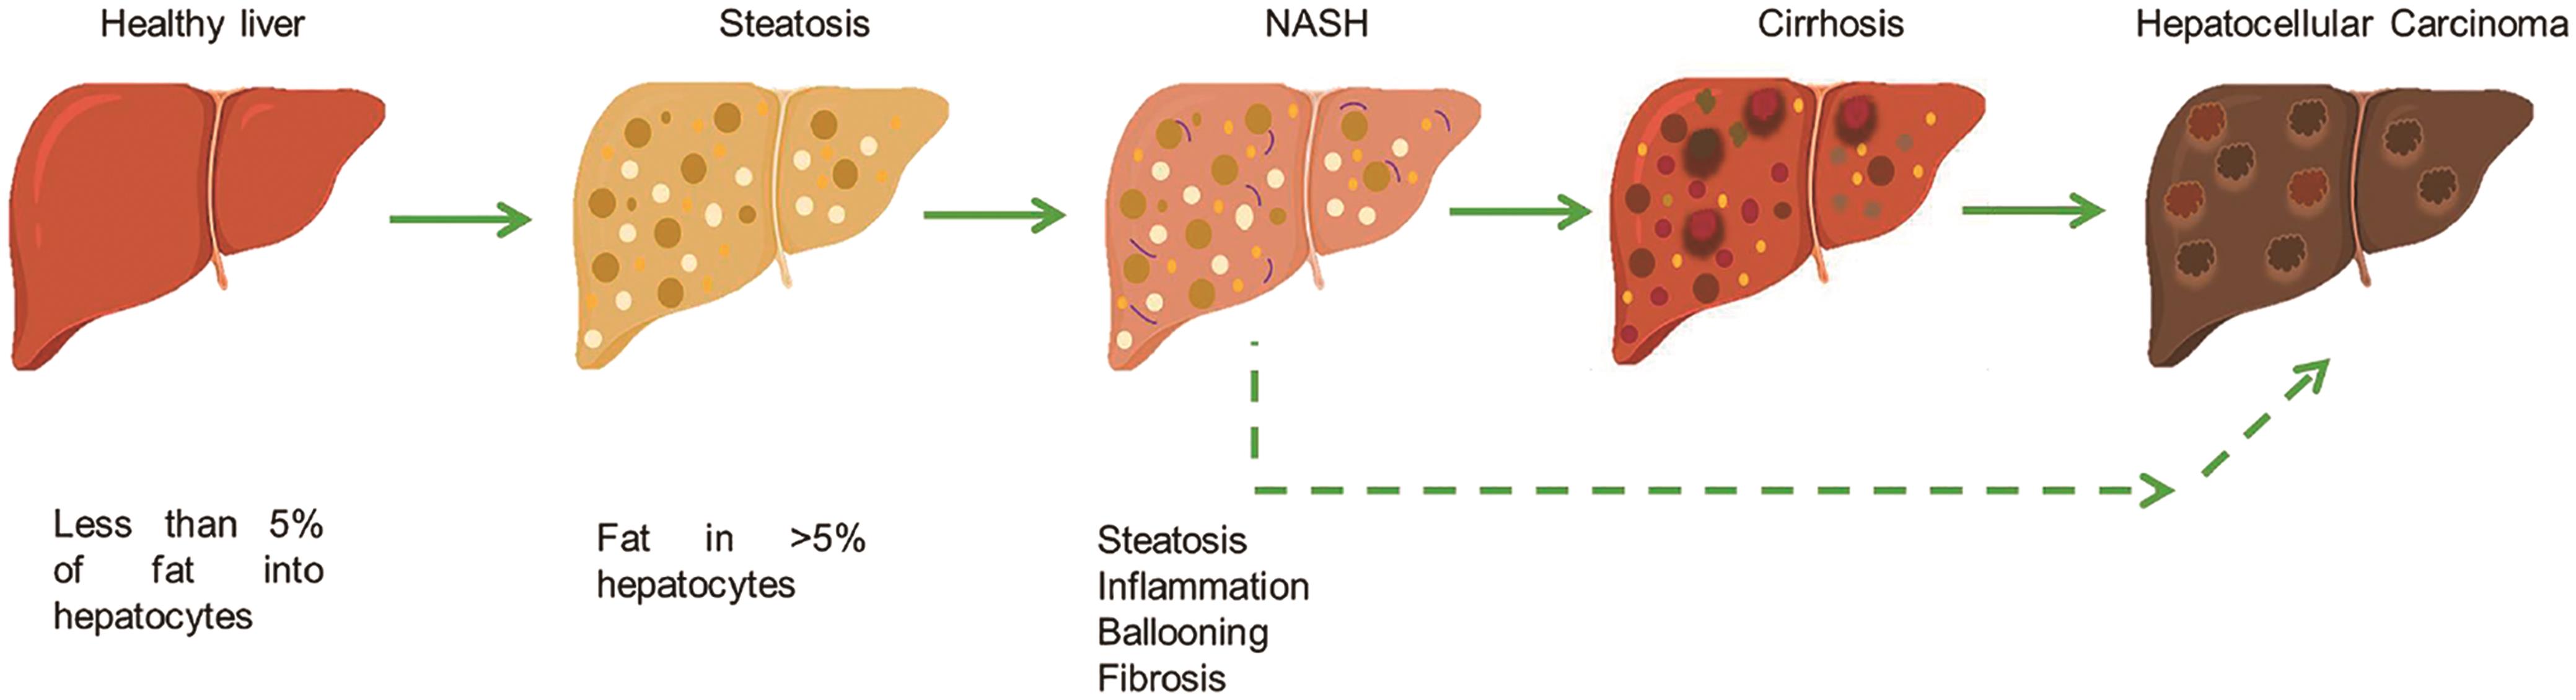 Spectrum of non-alcoholic fatty liver disease (NAFLD).